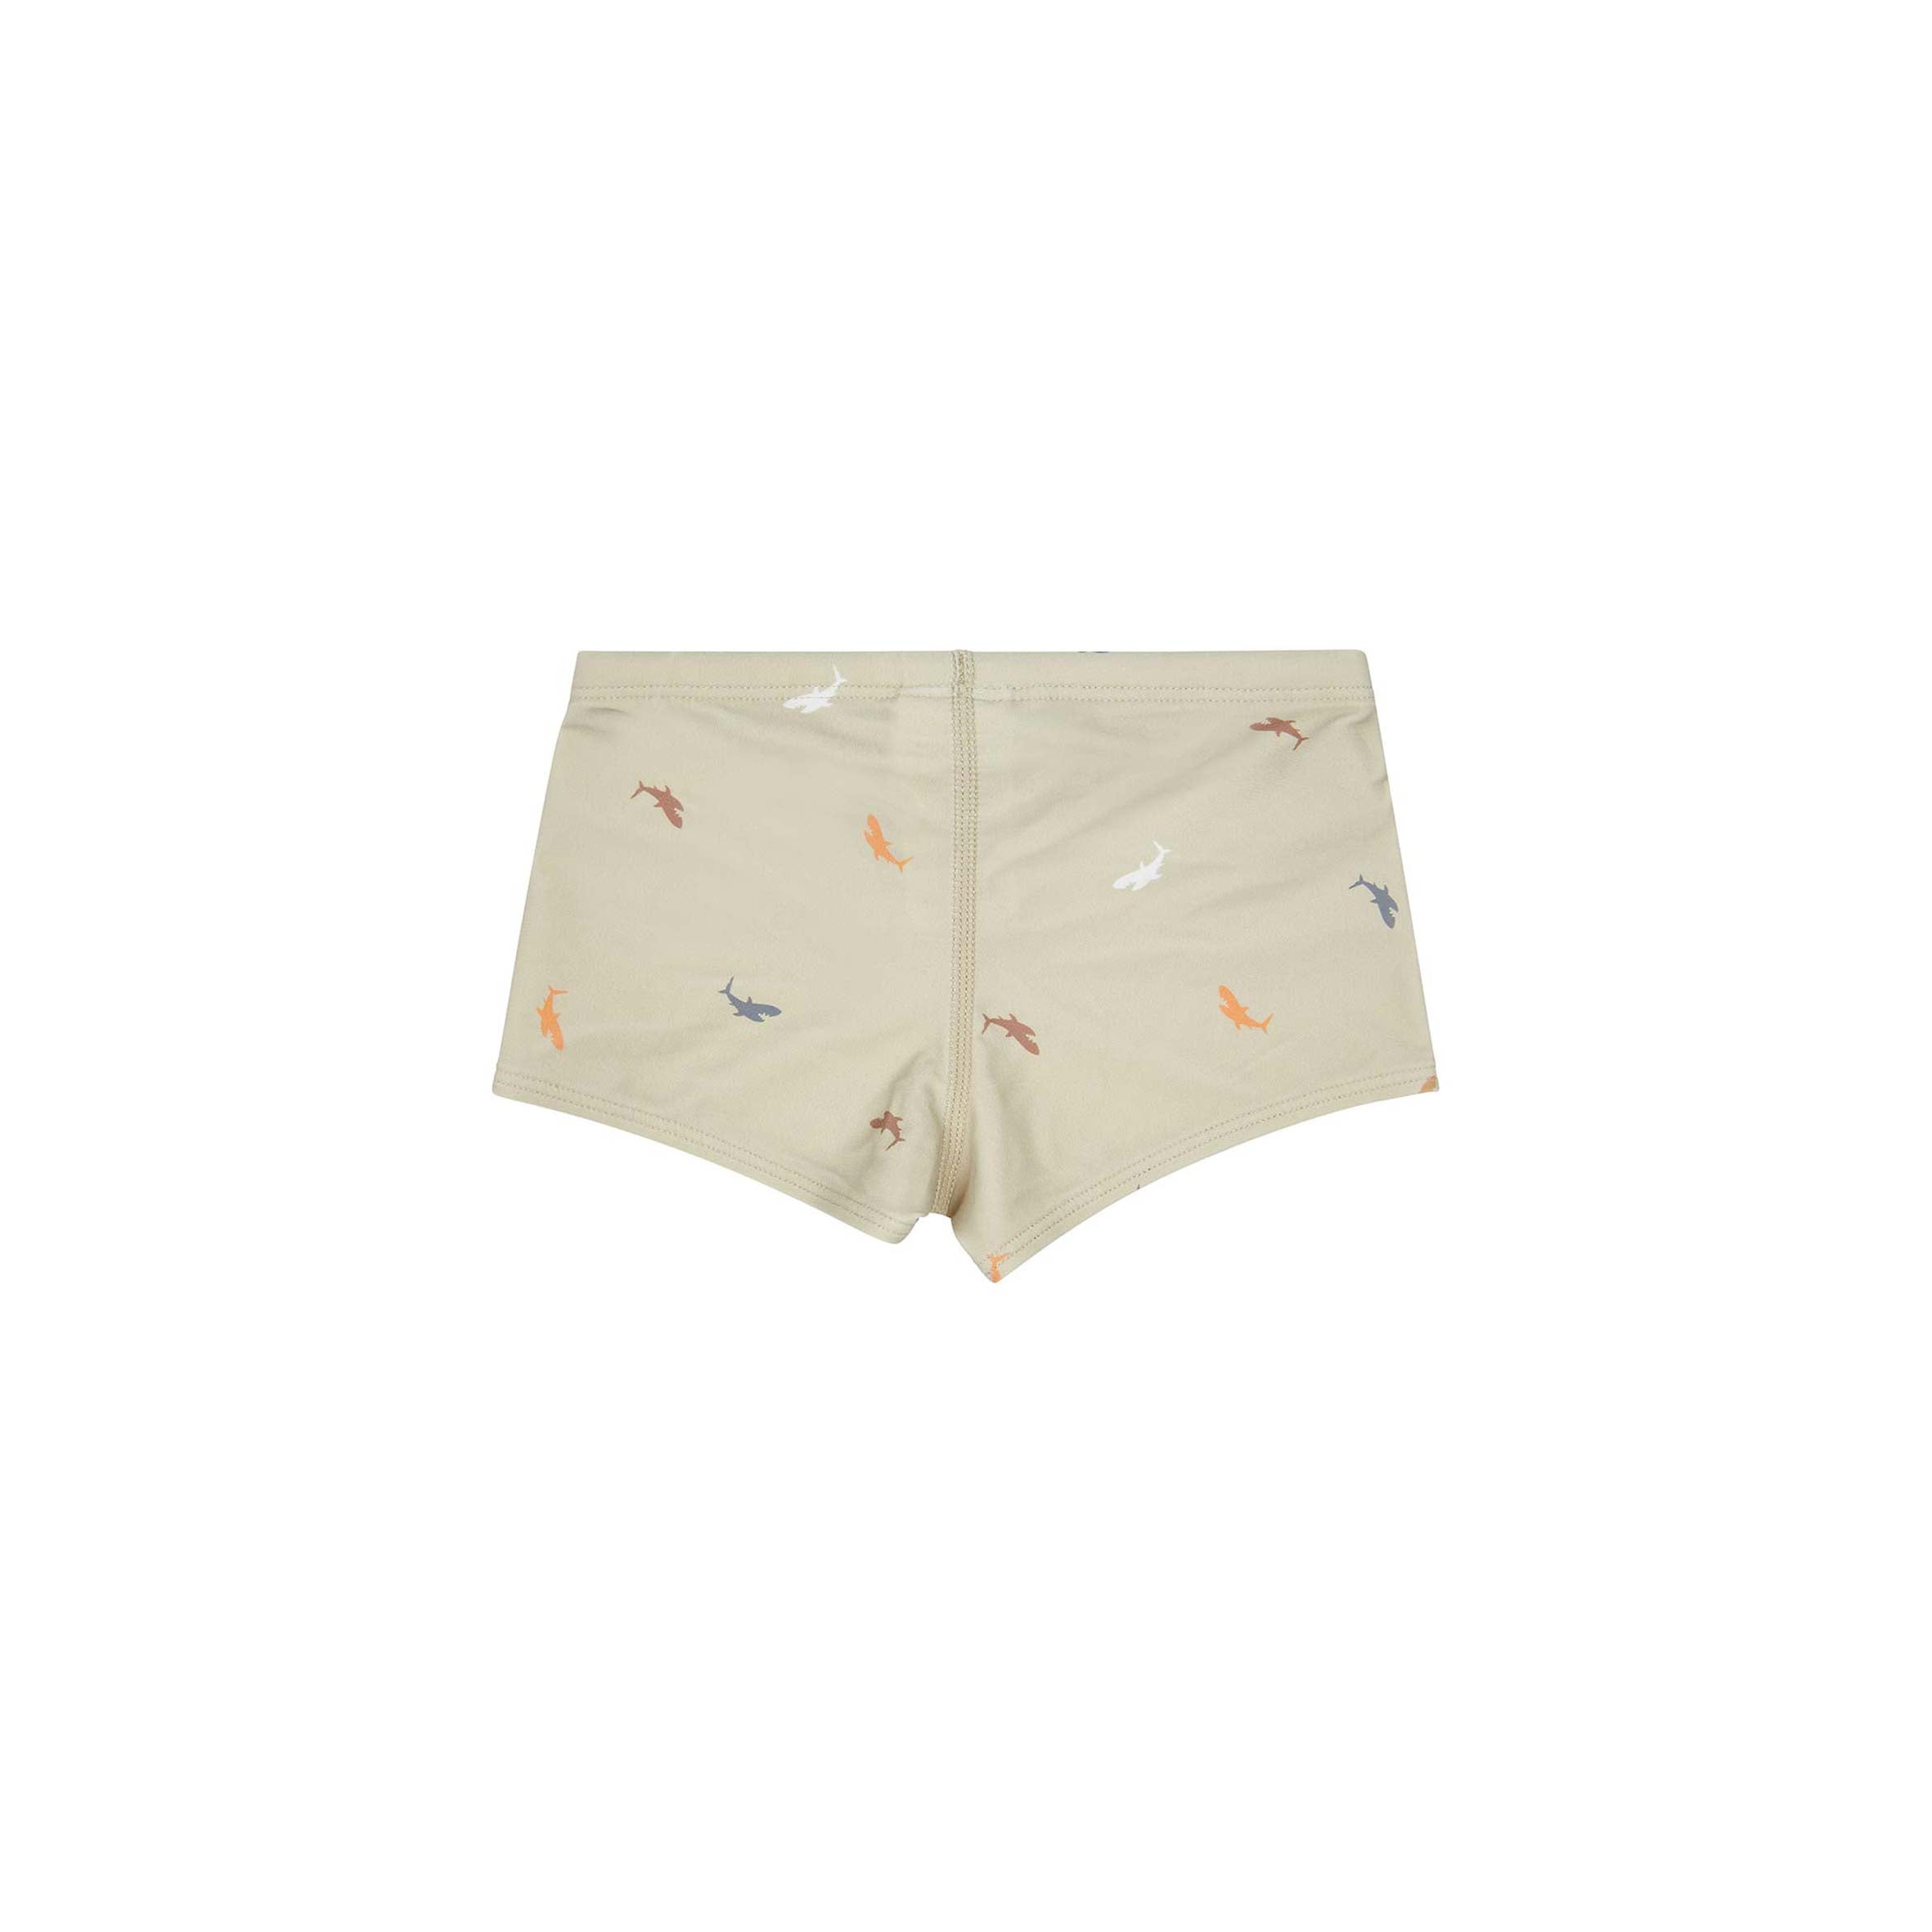 Toshi - Swim Shorts - Shark Tank